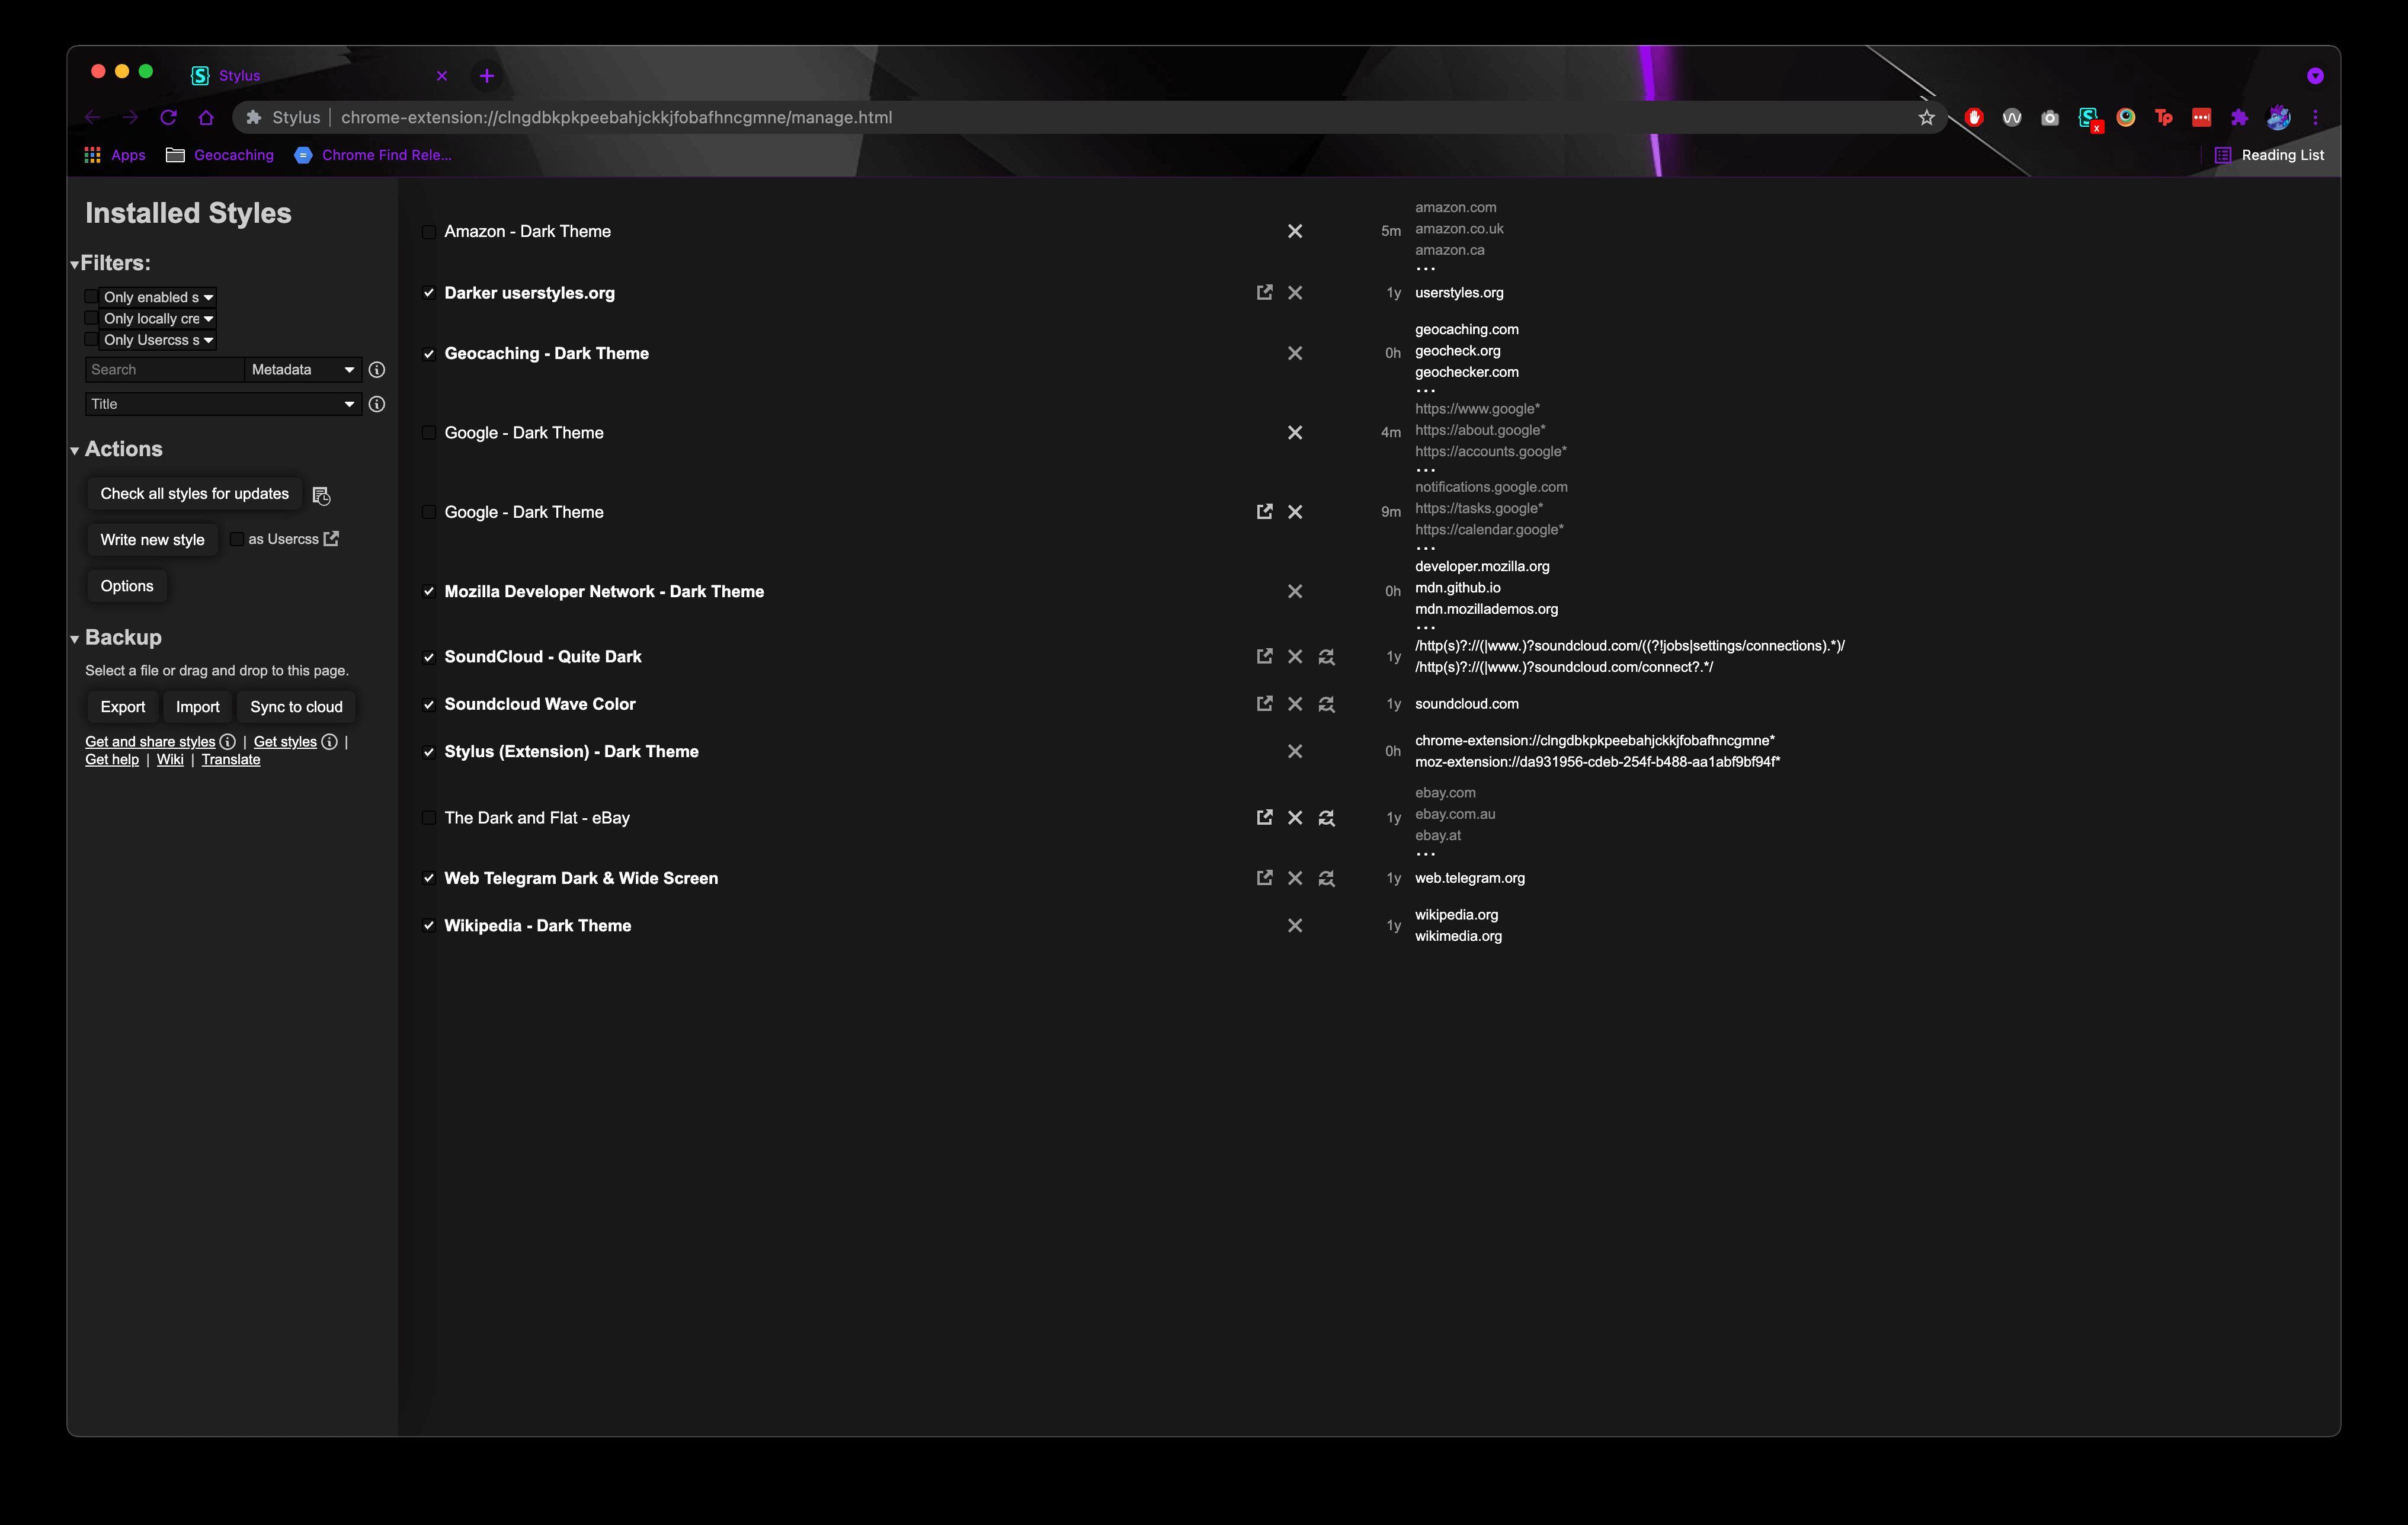 Screenshot of Stylus (Extension) - Dark Theme